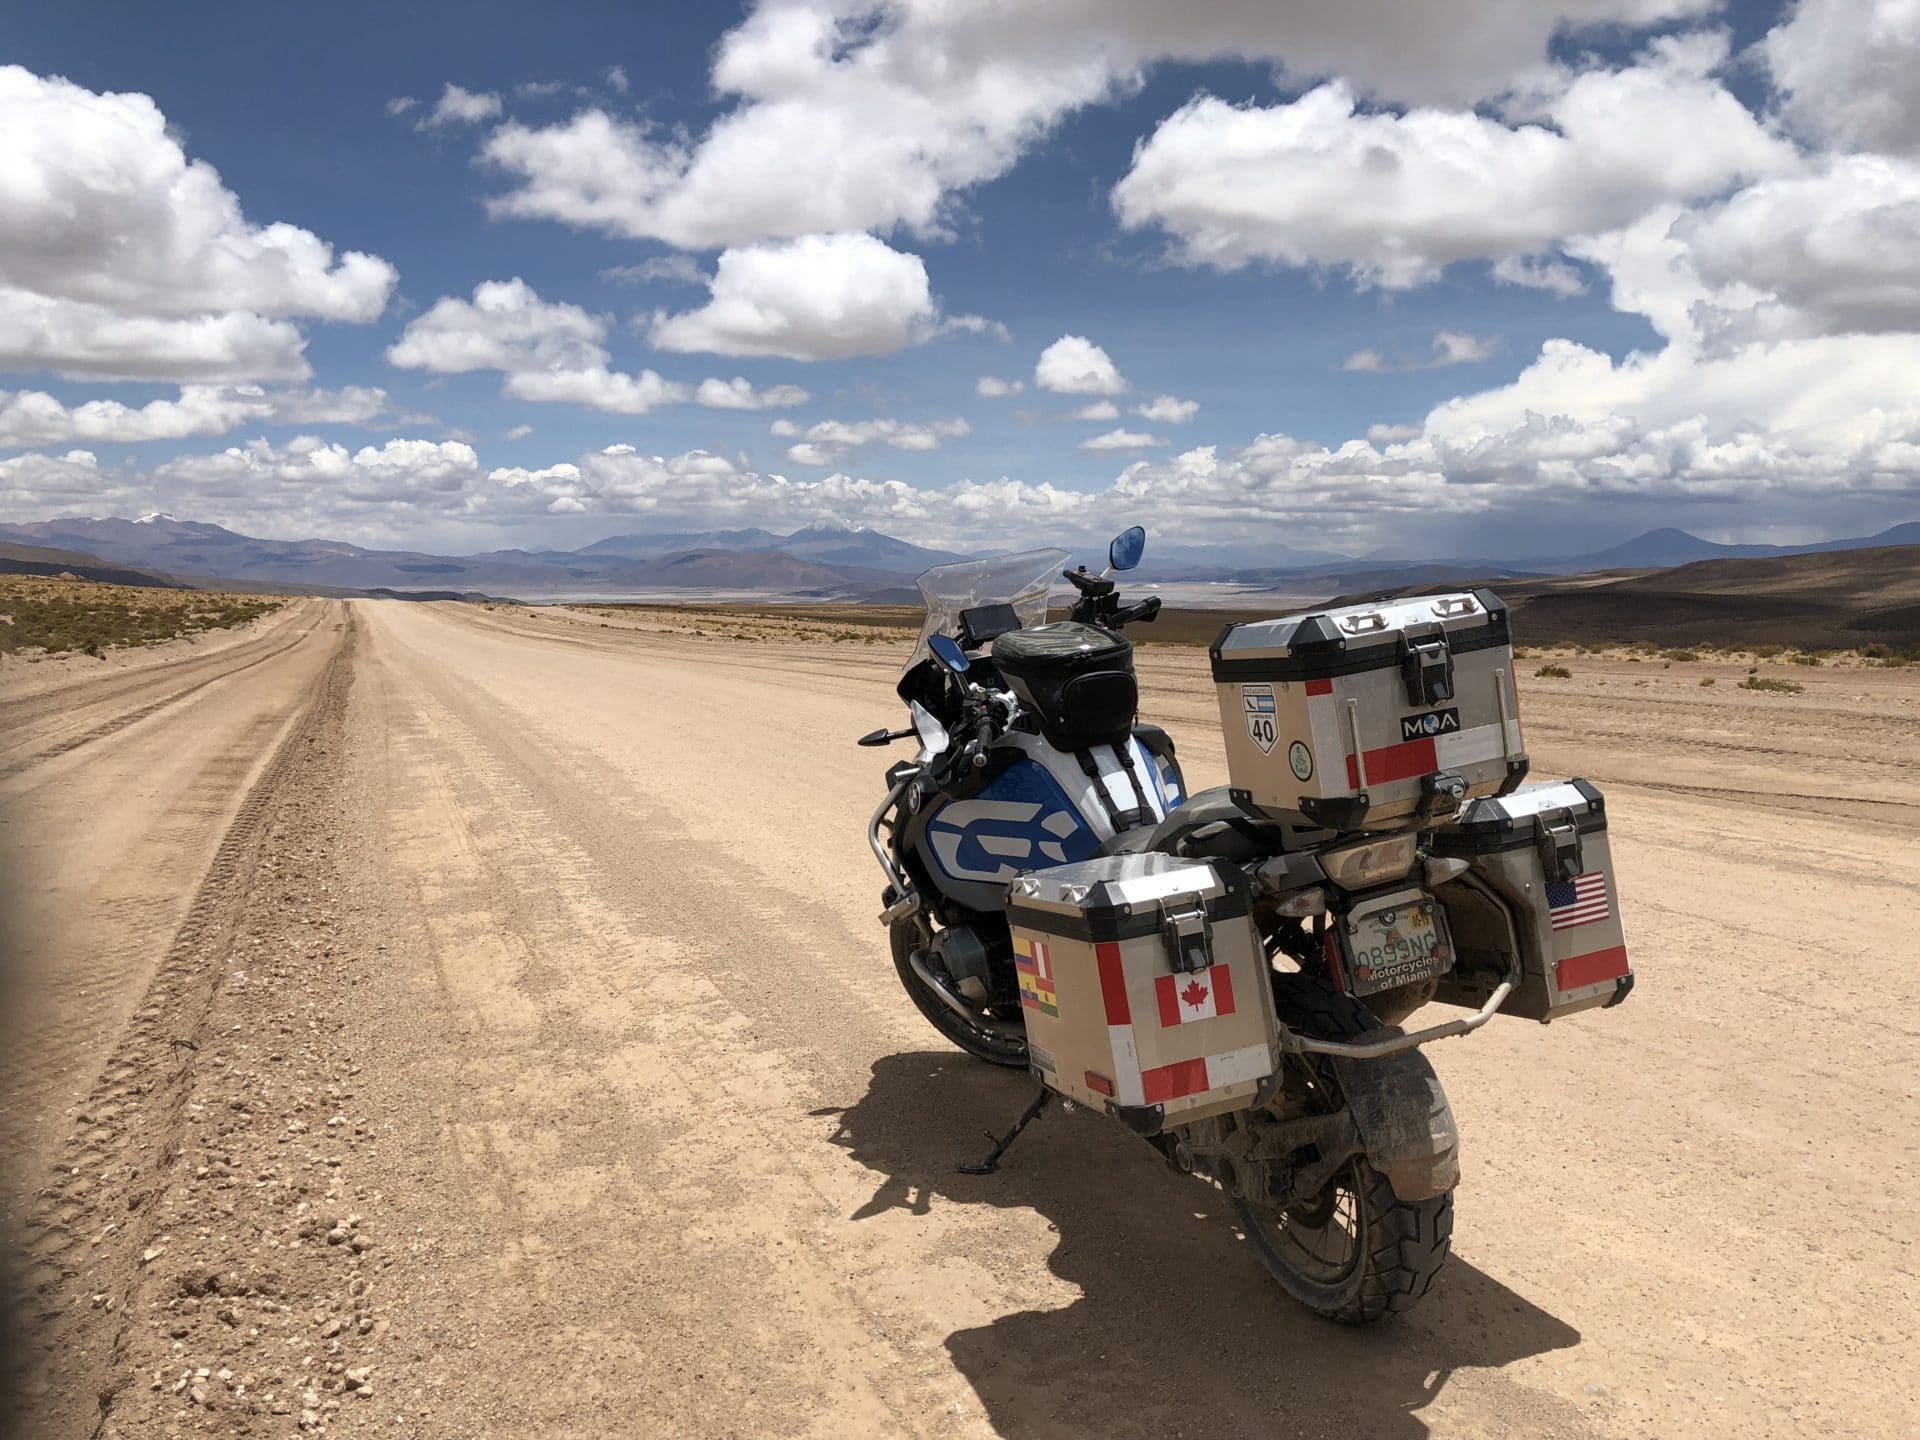 Phils bike on dirt road in boliva